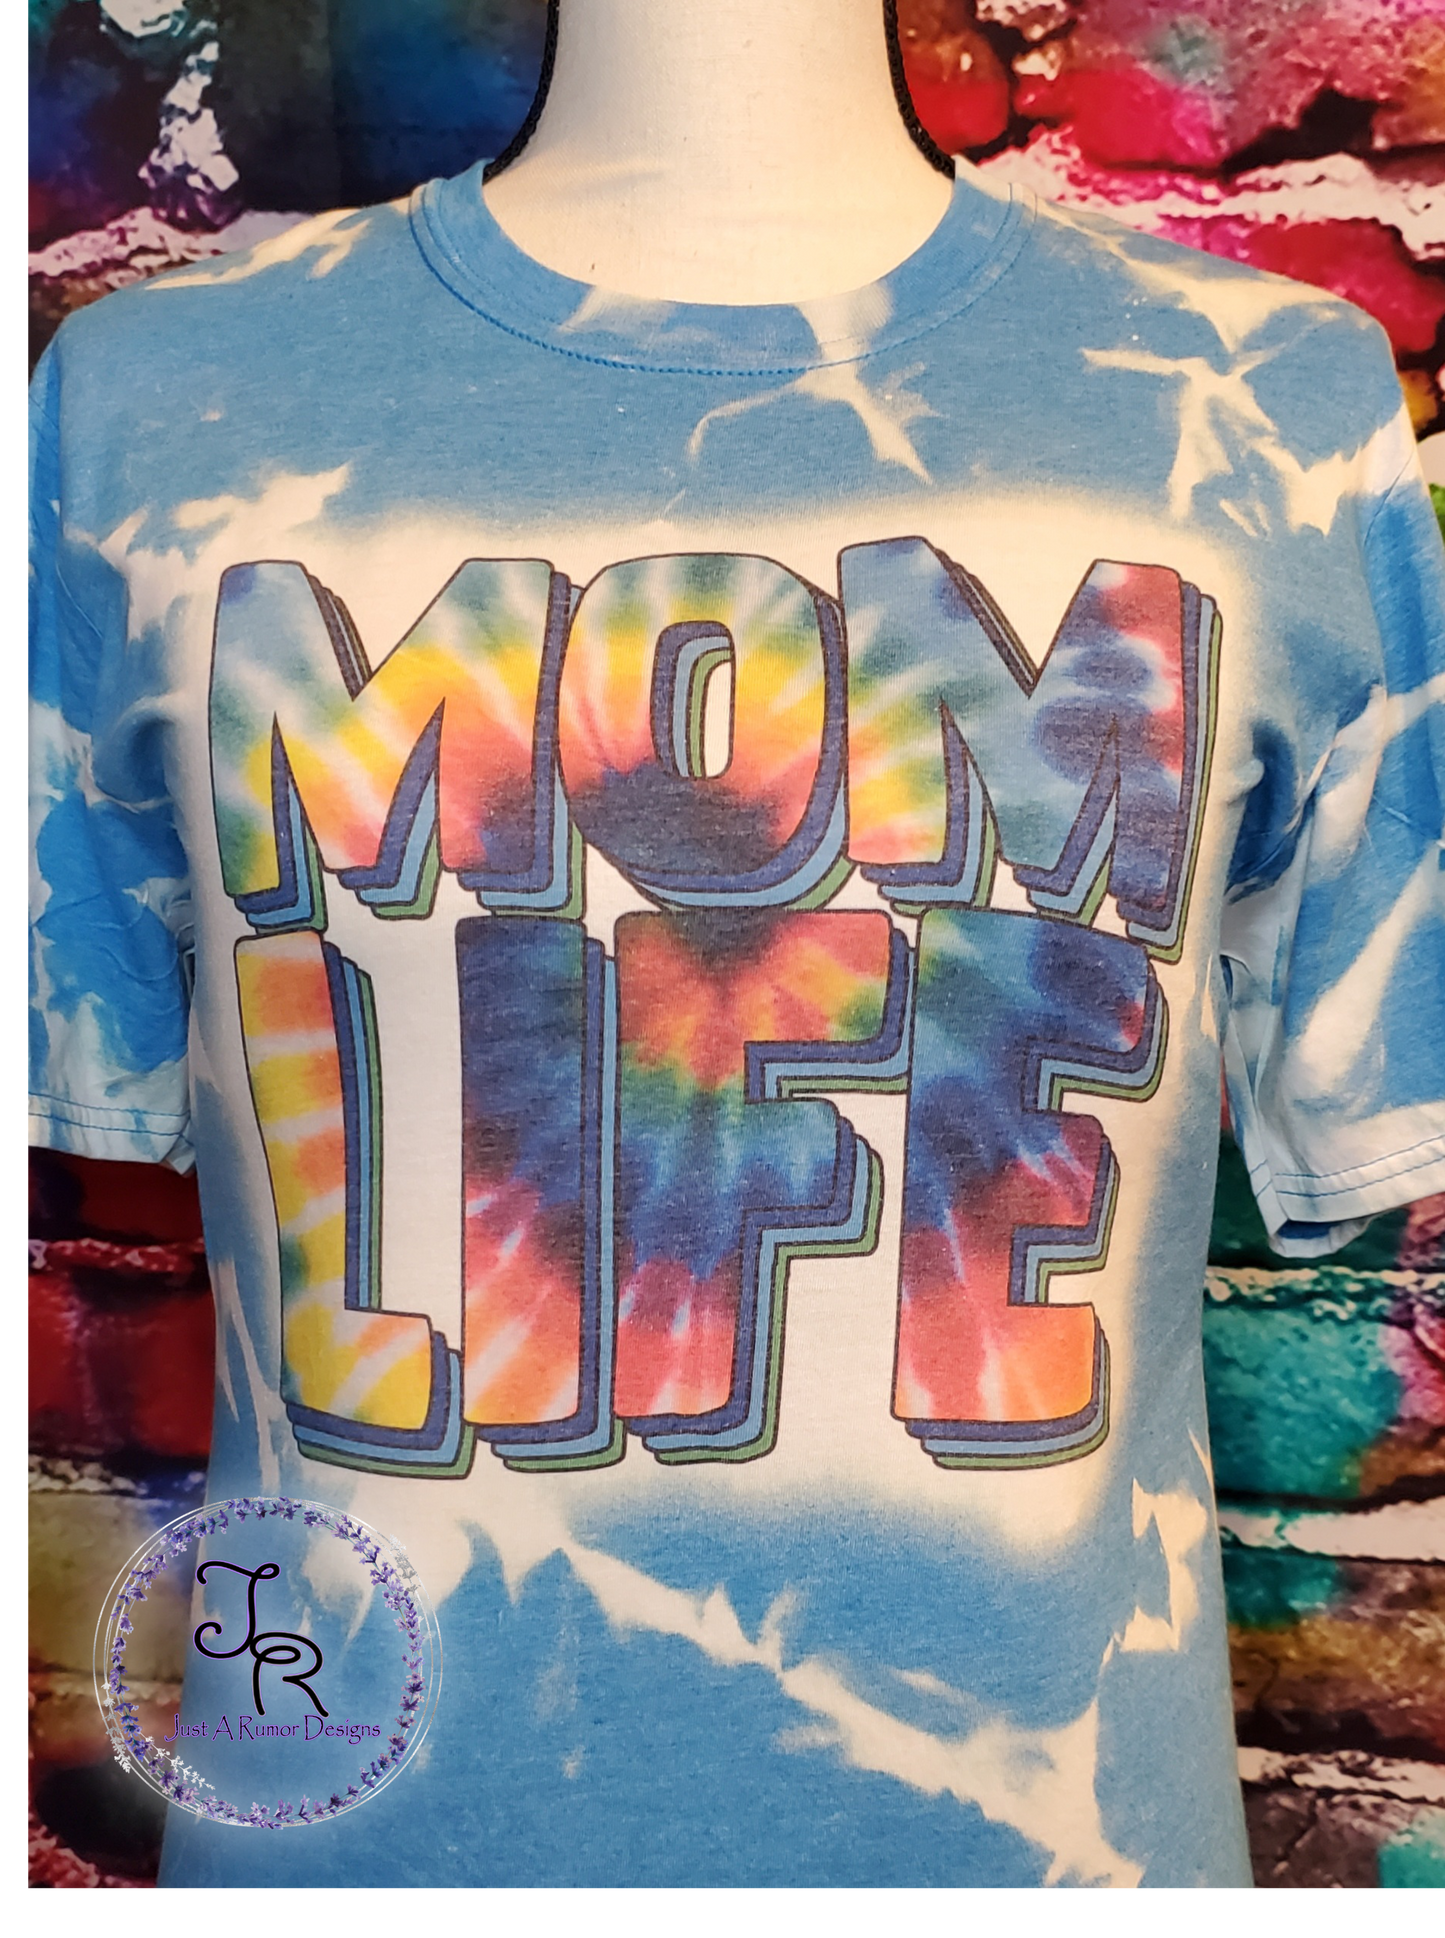 Mom Life Shirt